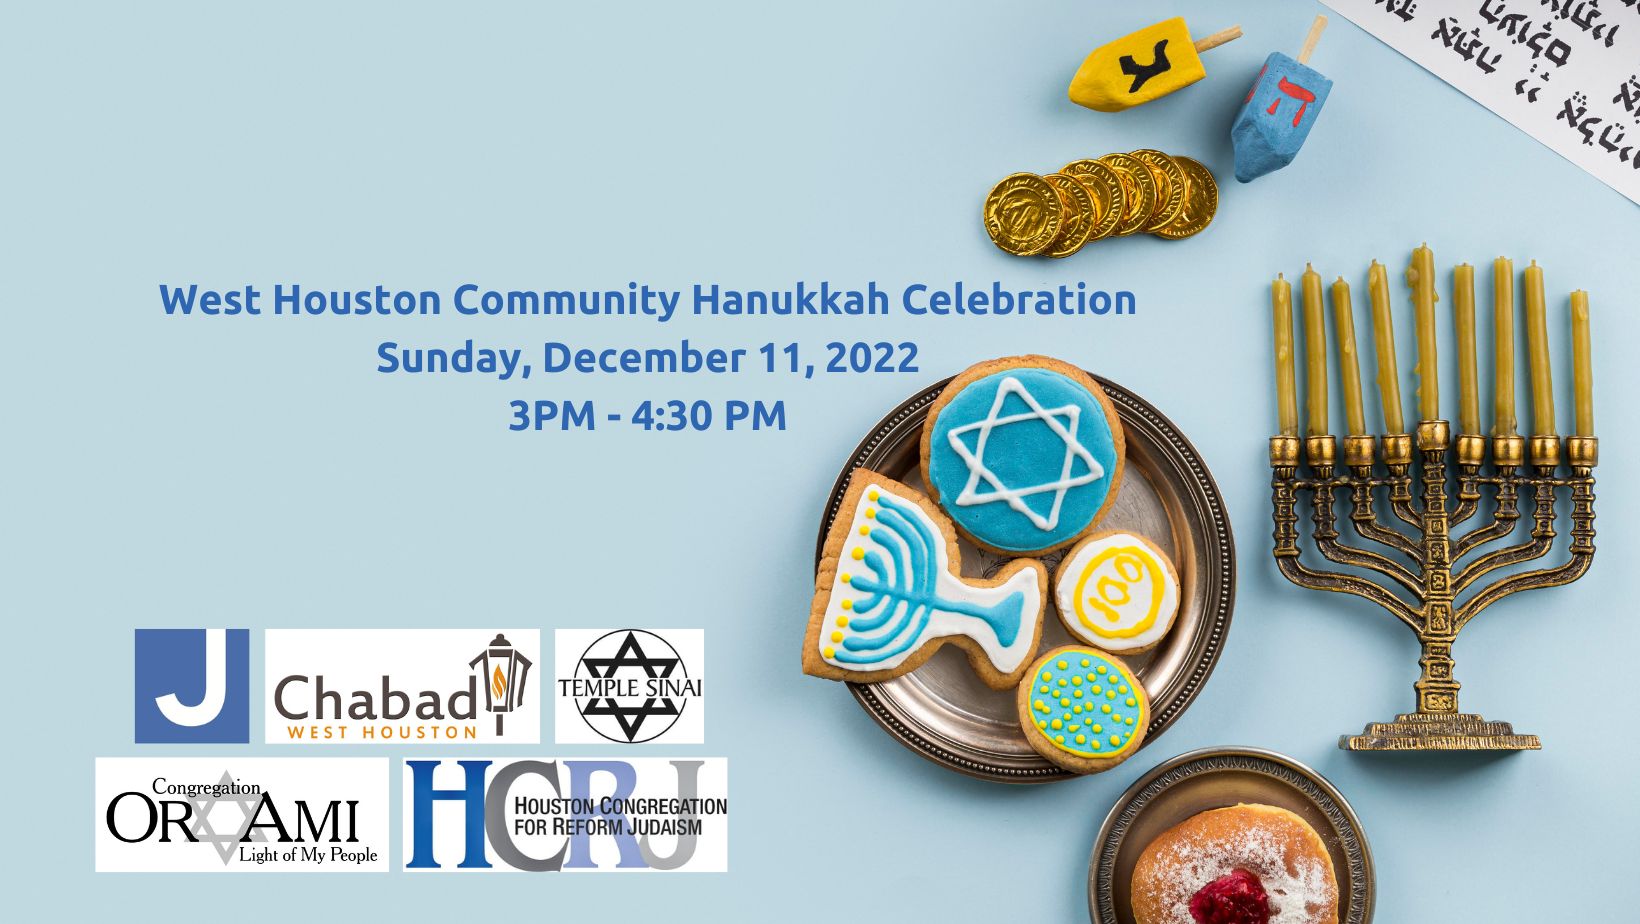 West Houston Community Hanukkah Celebration - Sunday, December 11, 3pm